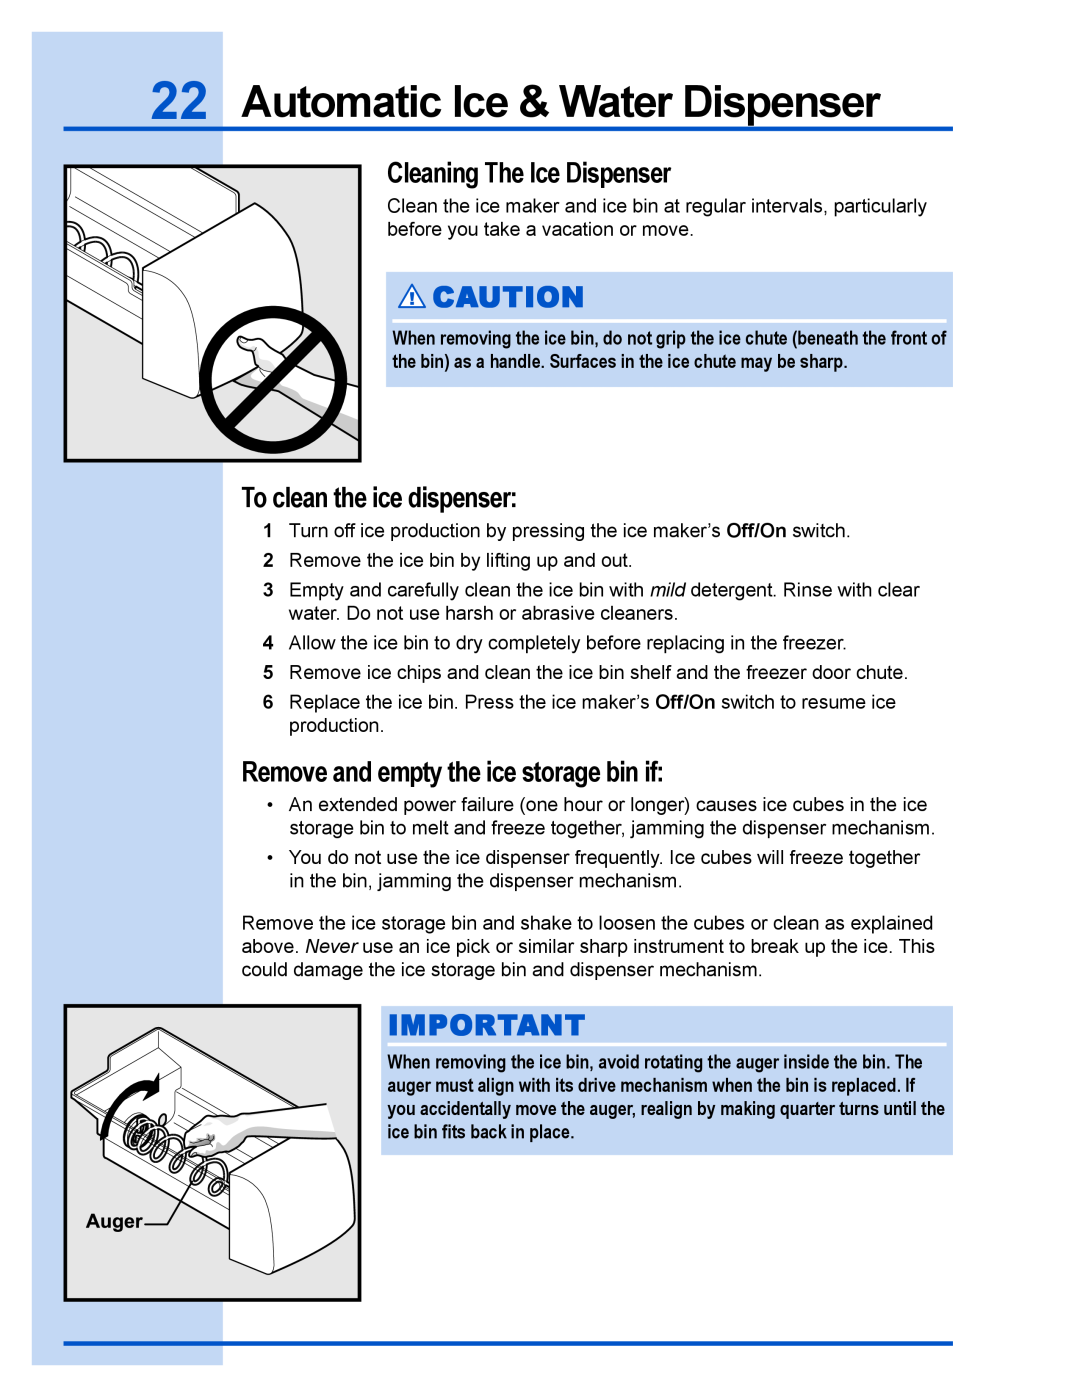 Electrolux U30024 manual Cleaning The Ice Dispenser, To clean the ice dispenser, Remove and empty the ice storage bin if 